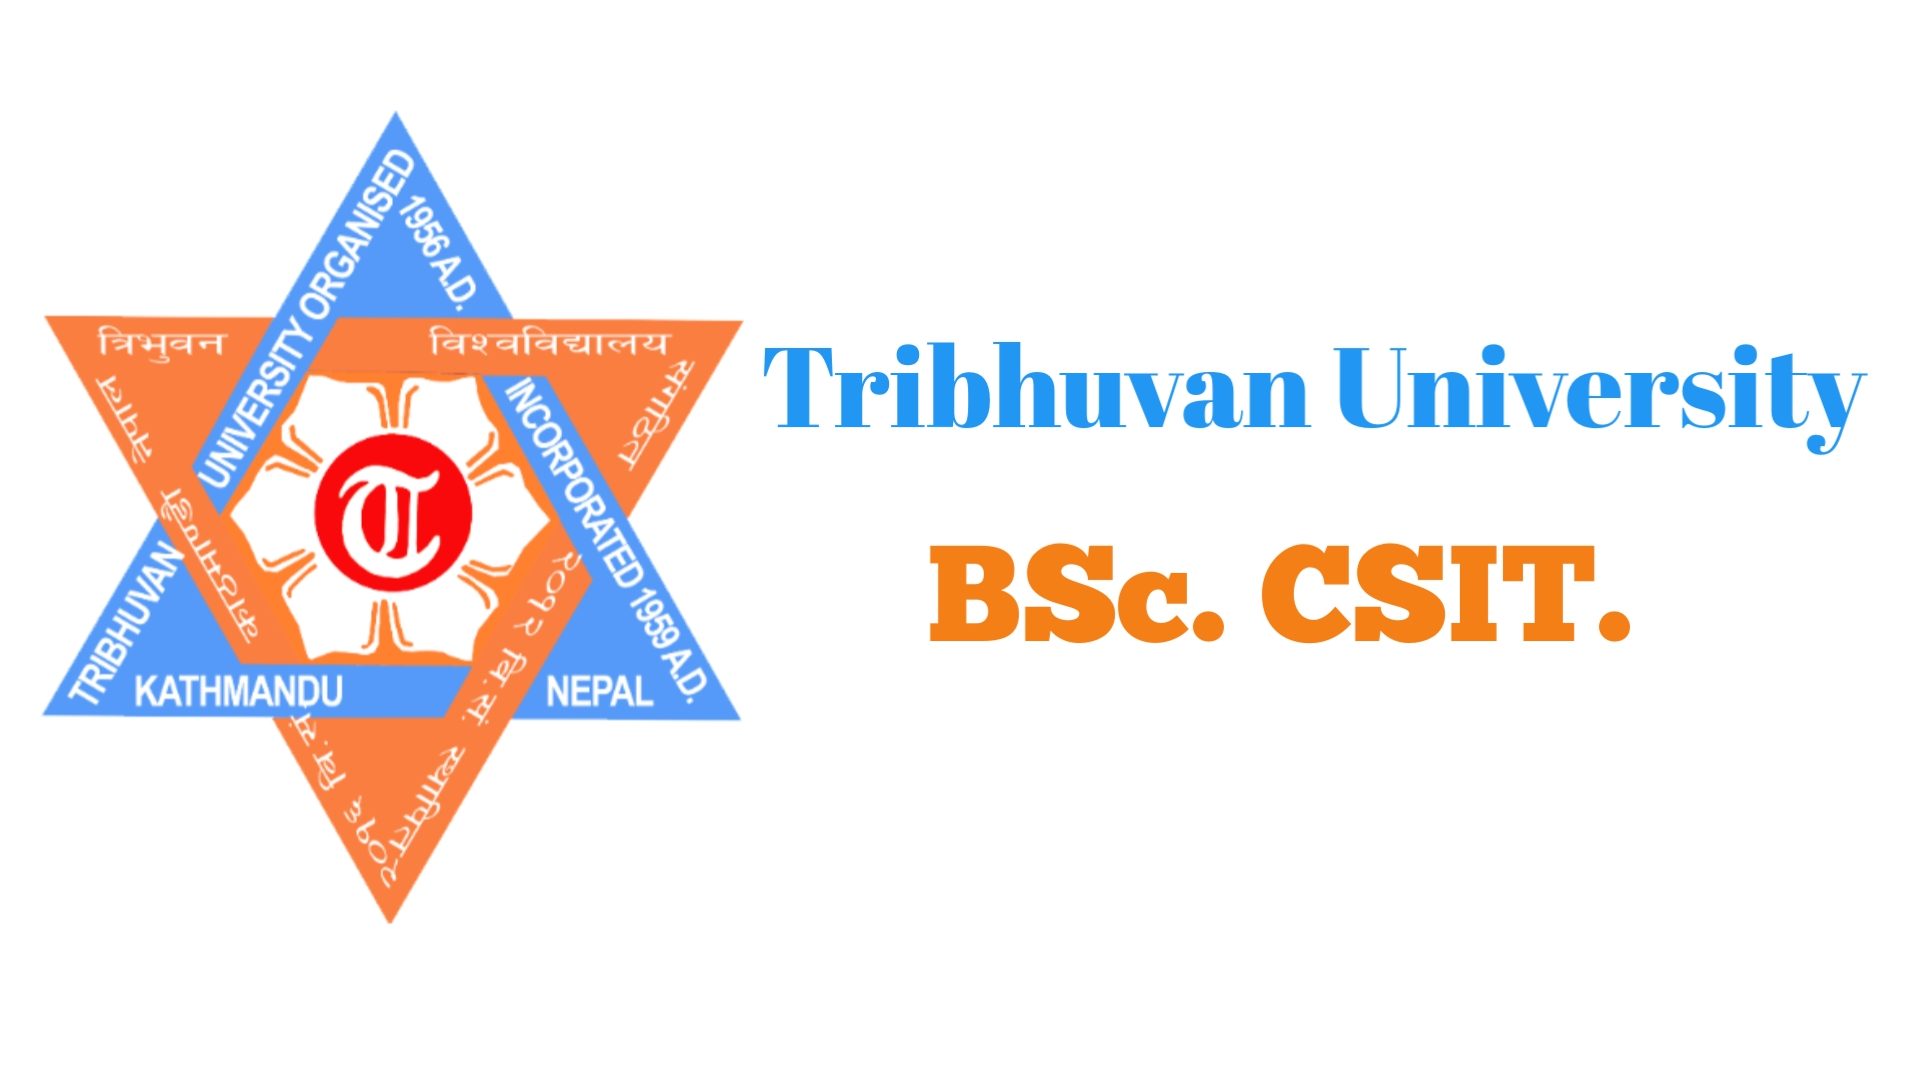  Tribhuvan University Logo along with BSc CSIT 